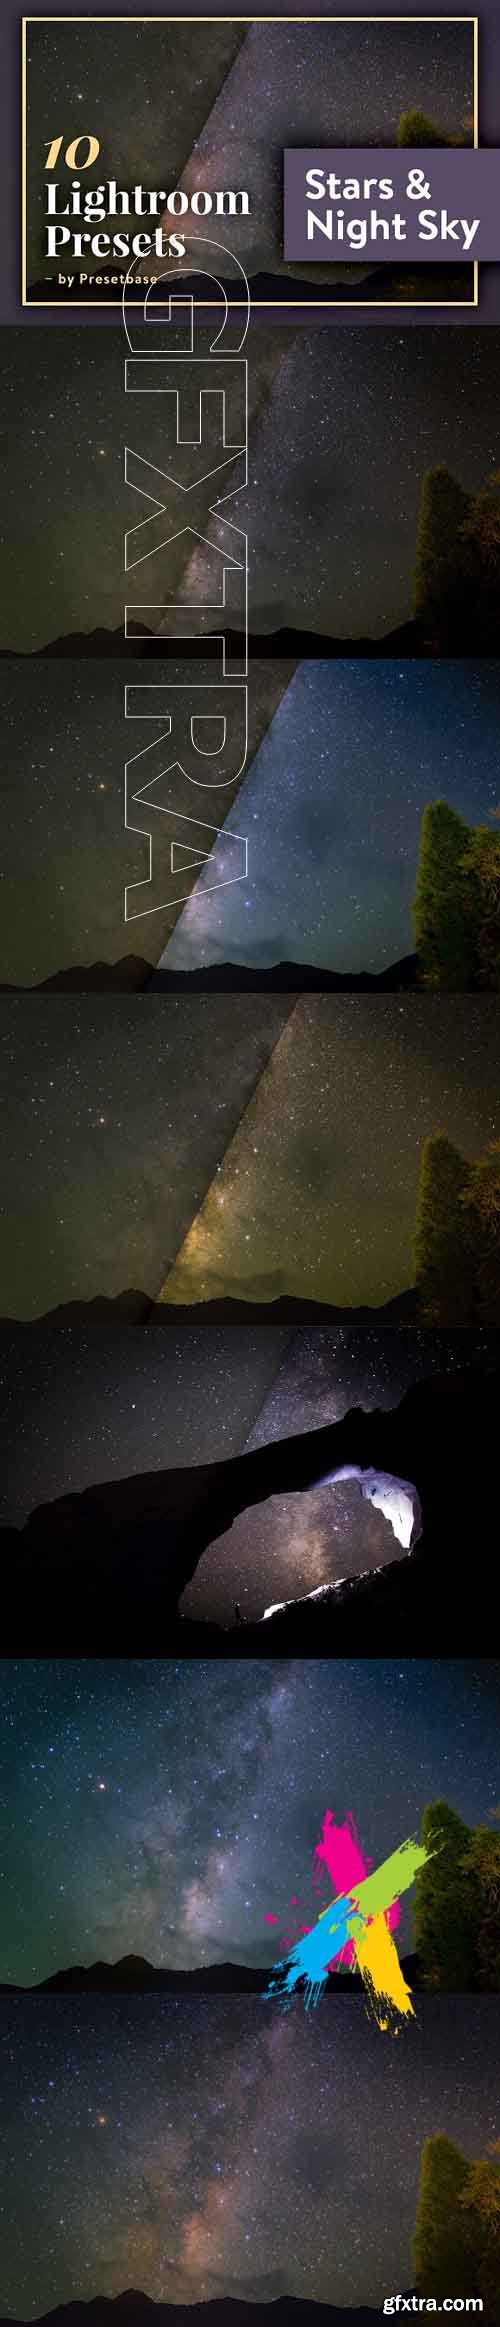 CM - Stars & Night Sky Lightroom Presets 1311404